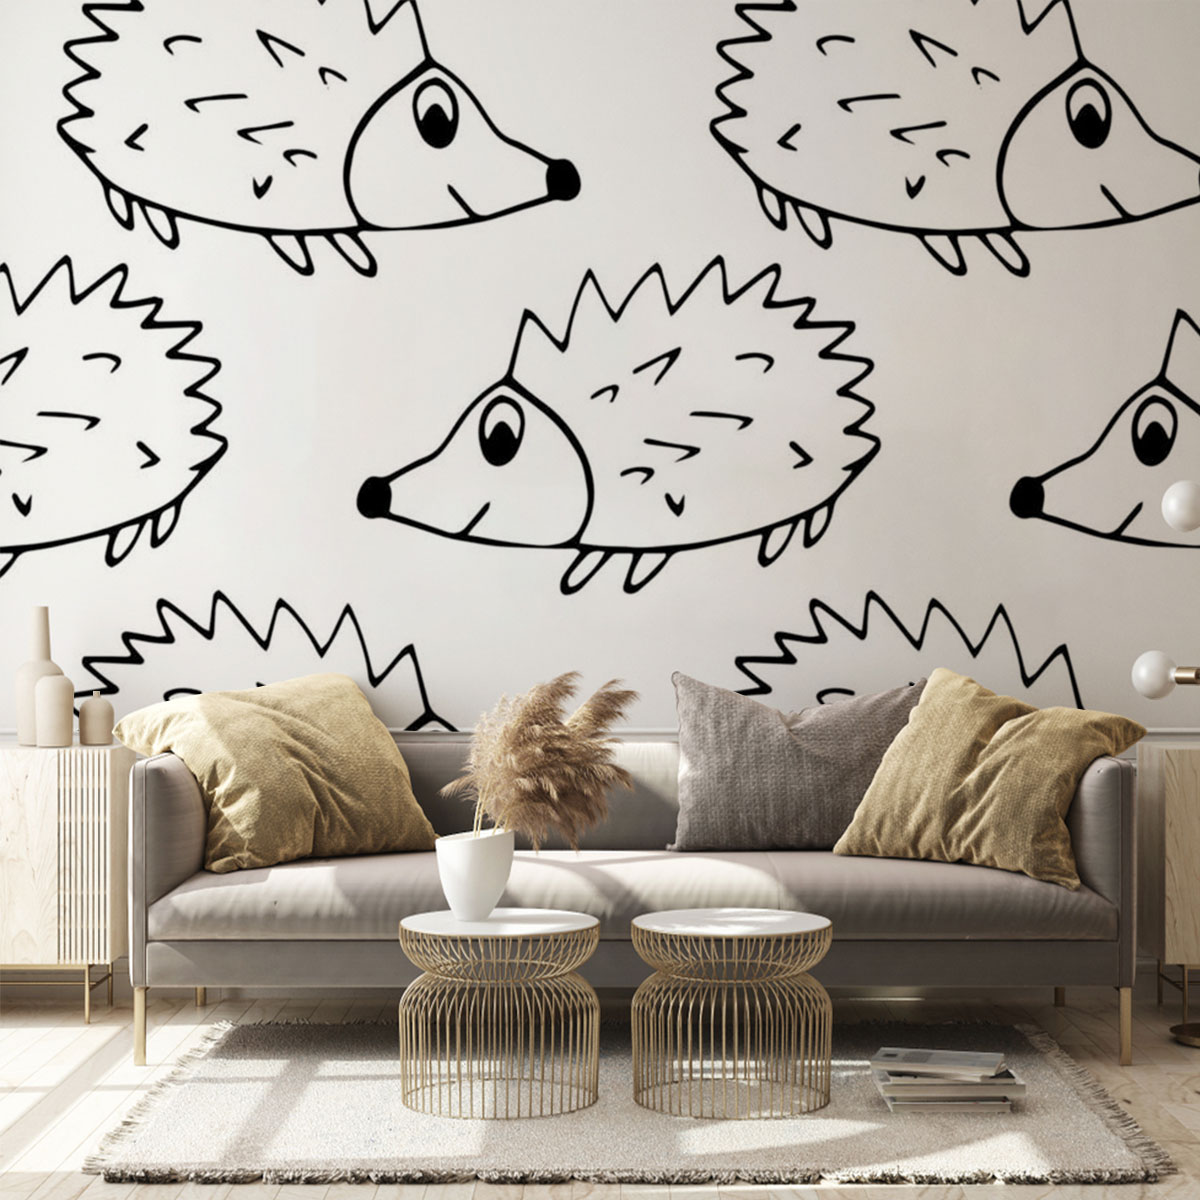 BnW Hedgehog Wall Mural